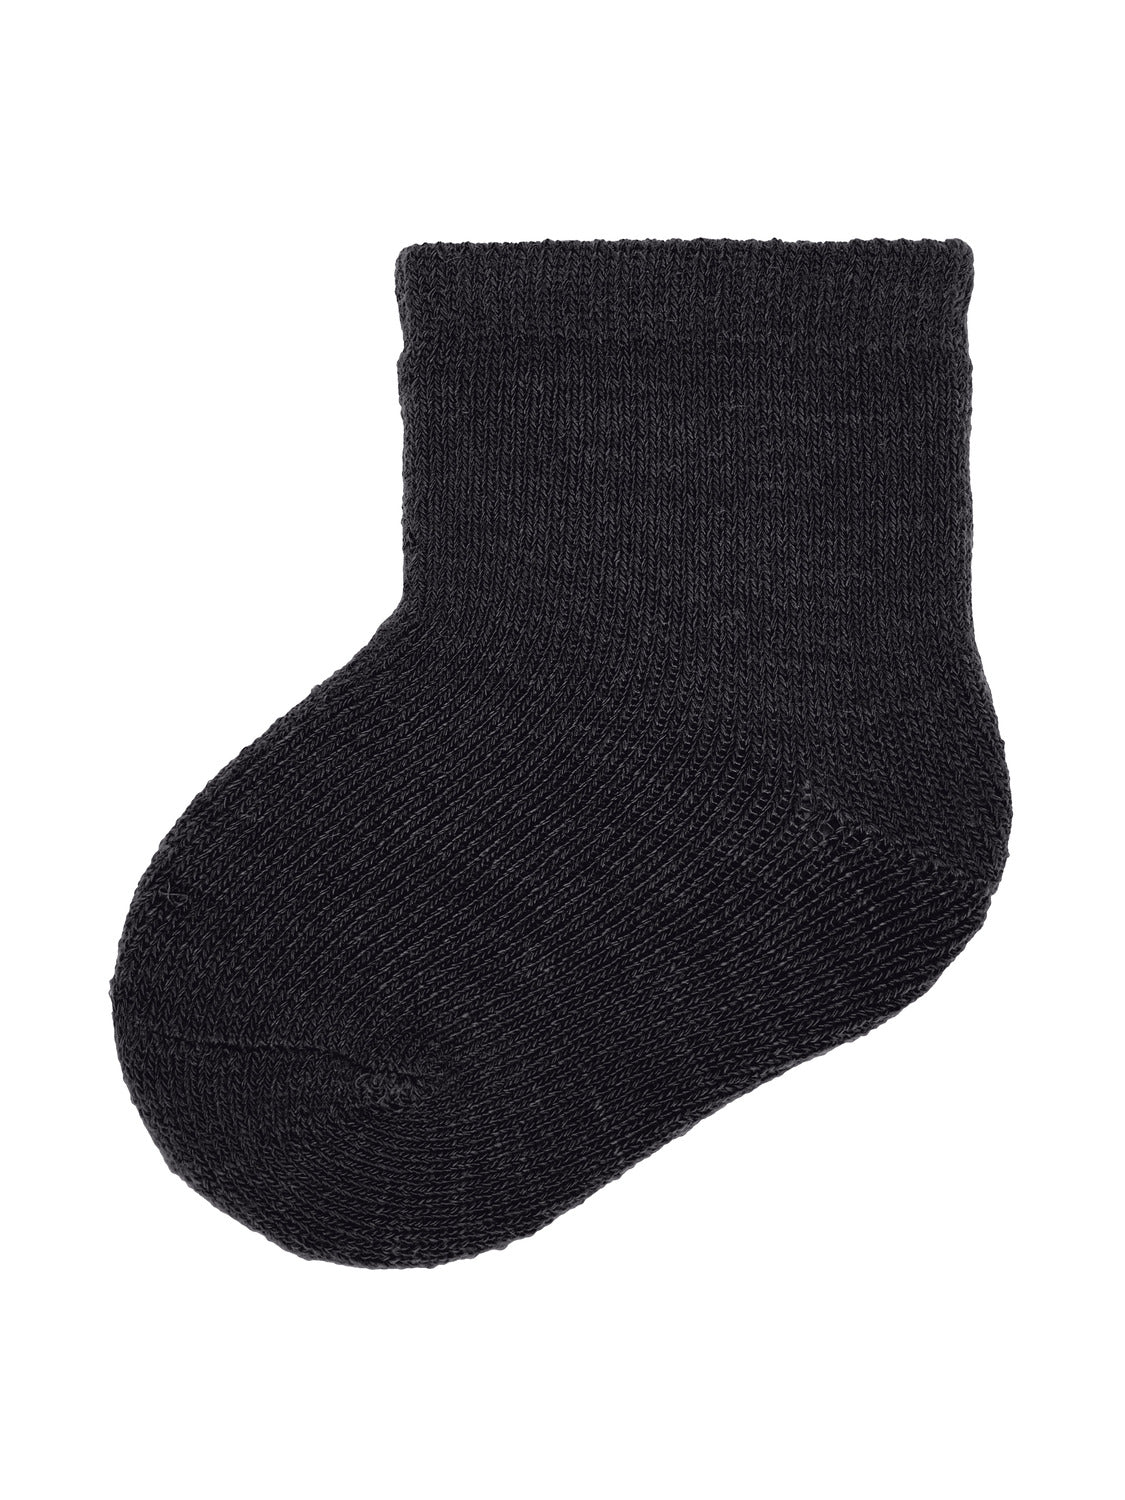 NBMWAKSI Socks - Black